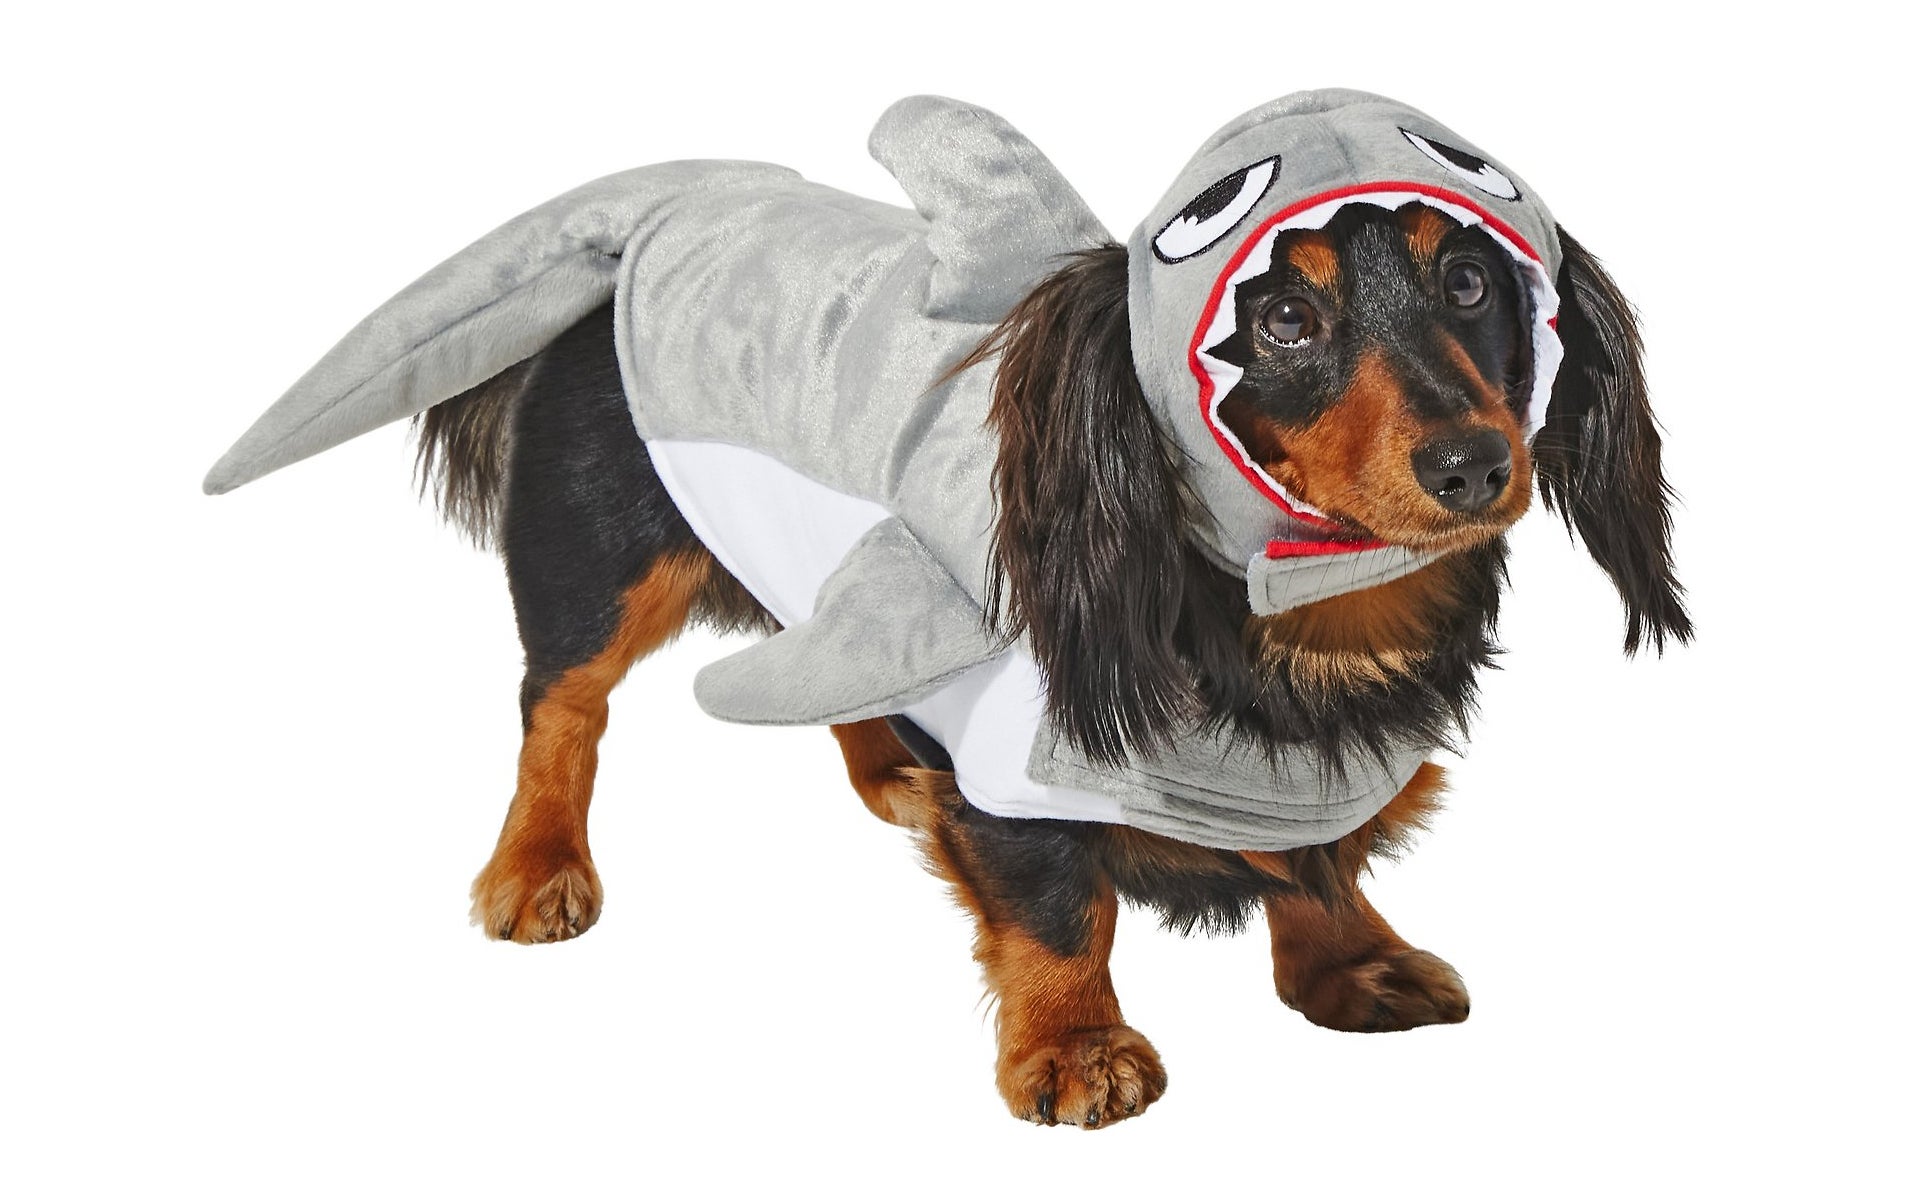 Shark attack costume